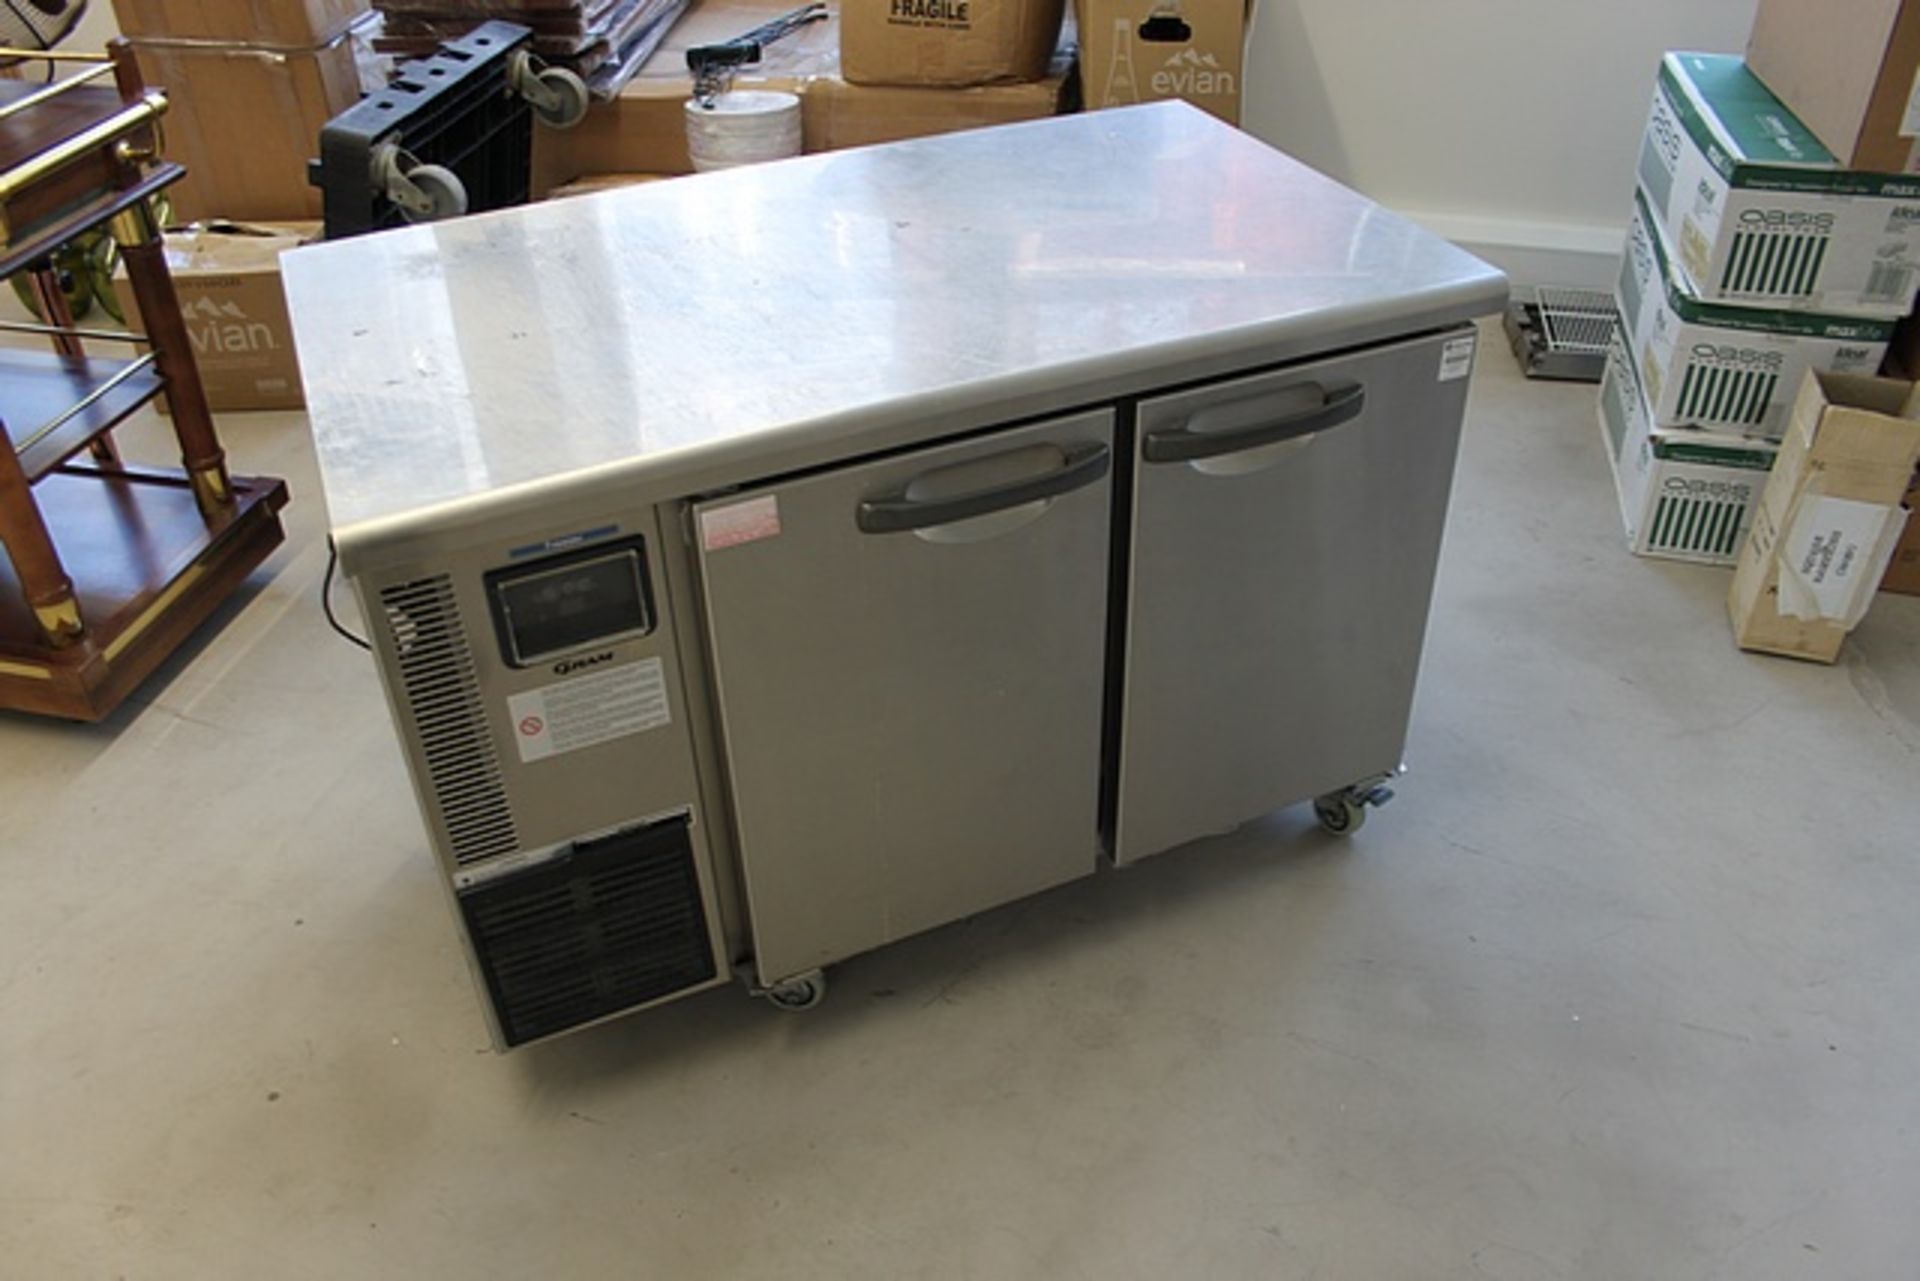 Gram Compact F 1210 RH c 265 ltr gastronorm counter freezer 1 1 GN temperature range -25°C to -7°C